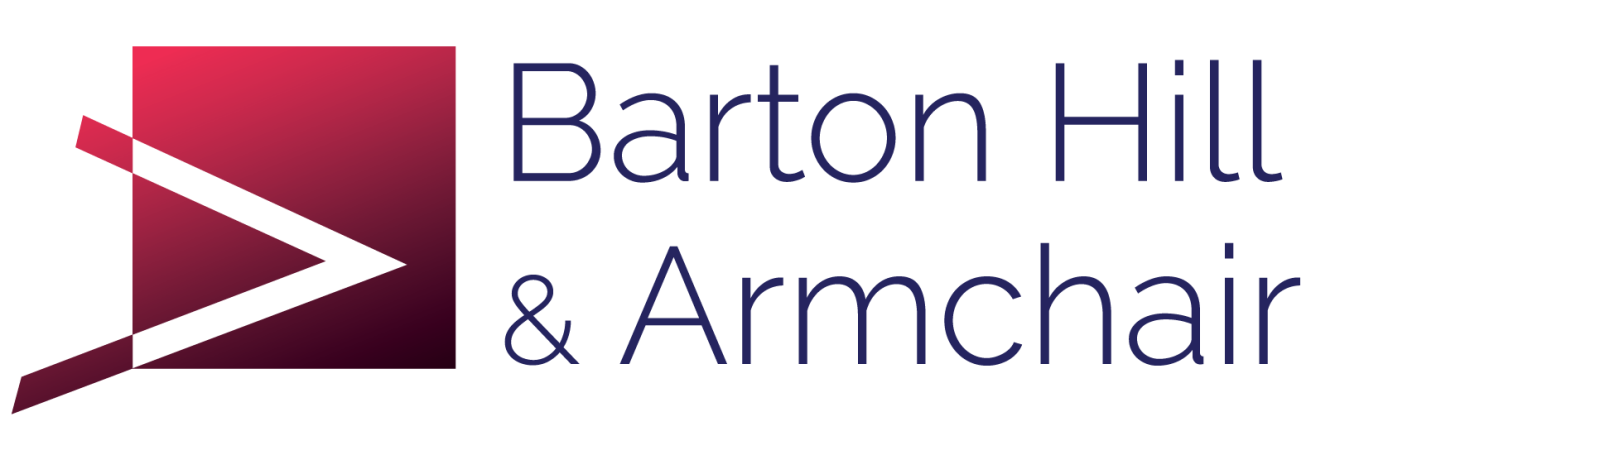 barton hill travel & armchair dm